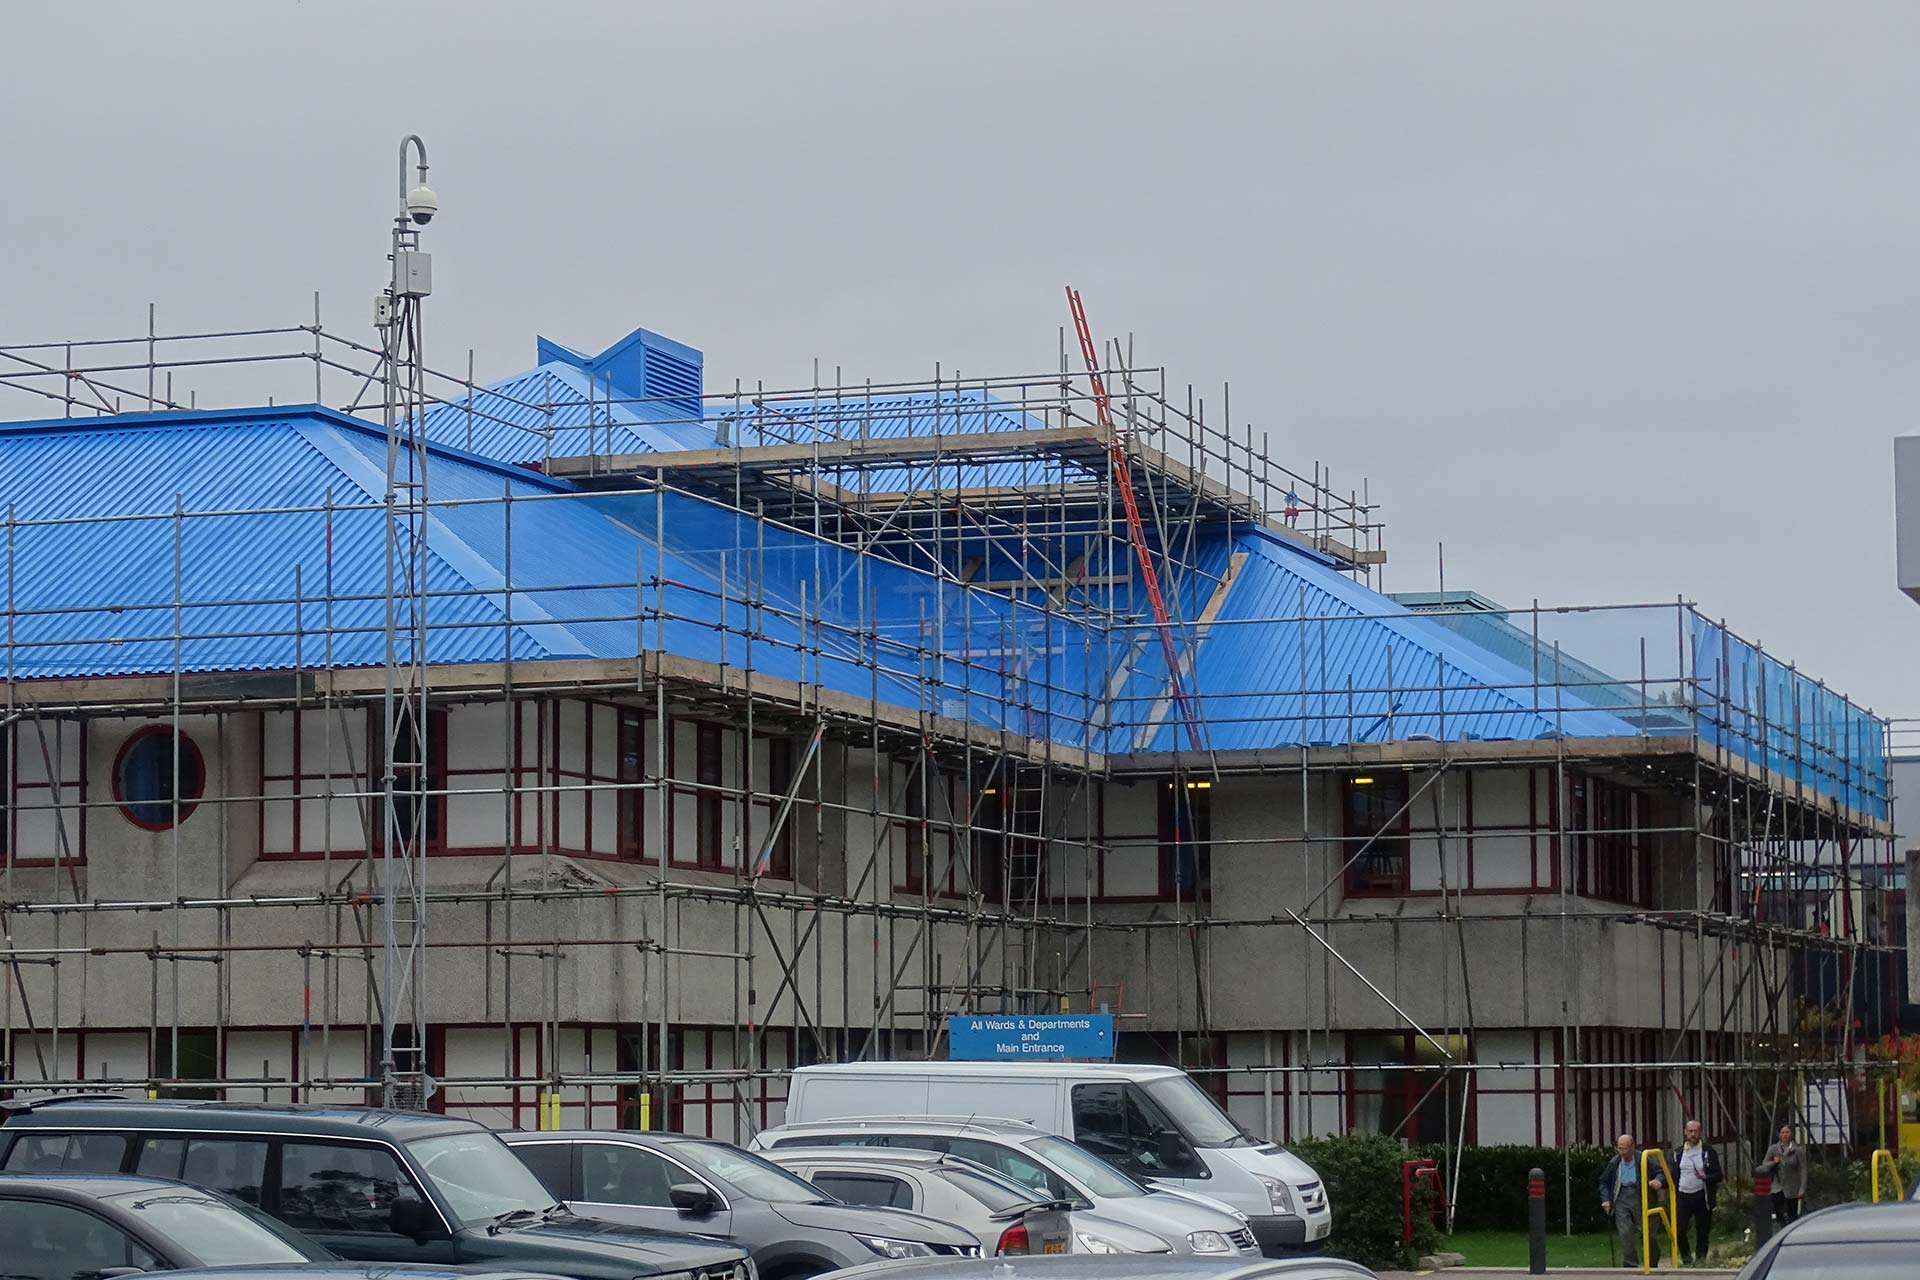 Royal Bournemouth Hospital - Bournemouth Scaffolding Ltd Project Work